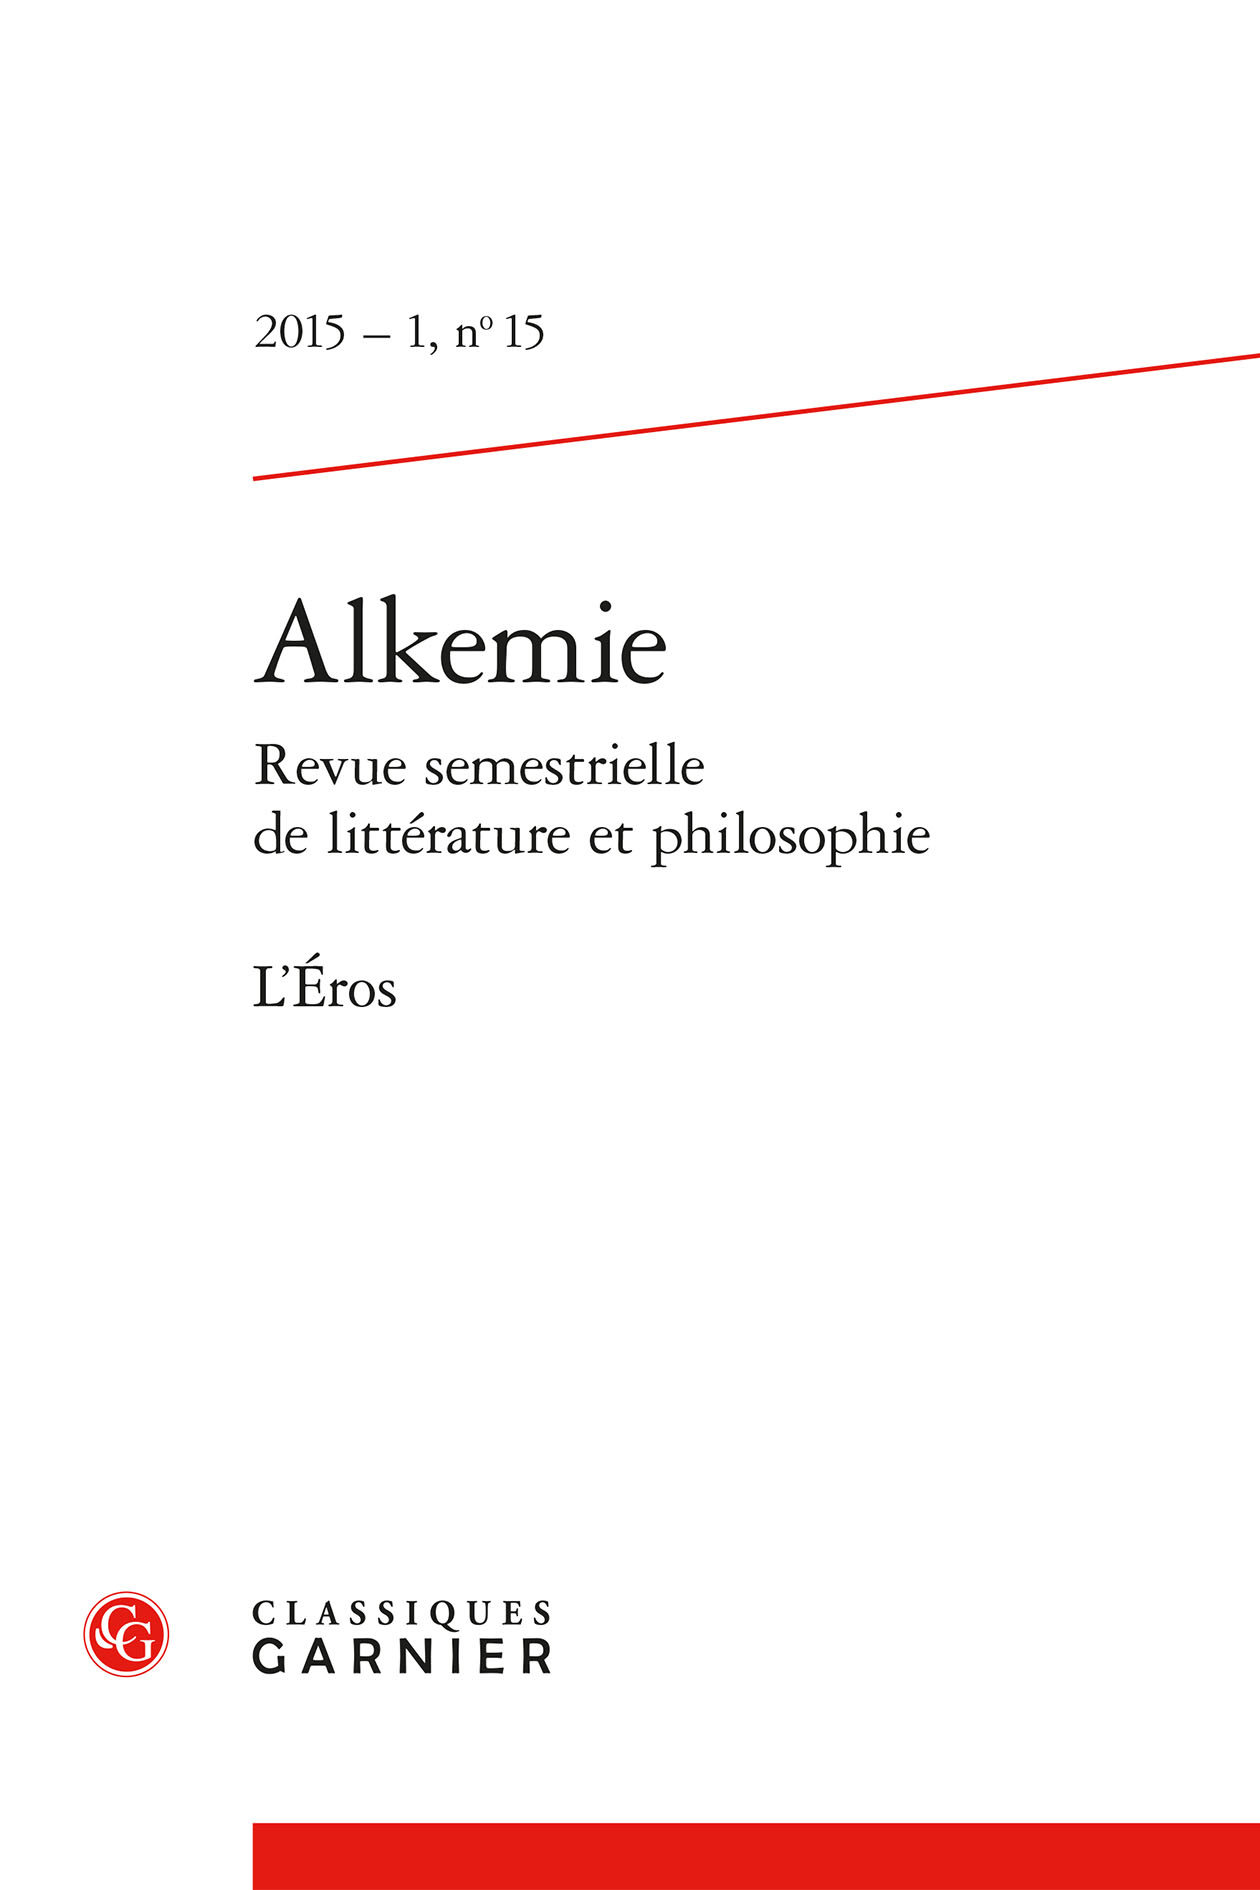 Yves Leclair, Cours s’il pleut. Poèmes, Gallimard, [coll. “blanche”], 2014, 144 p. Cover Image